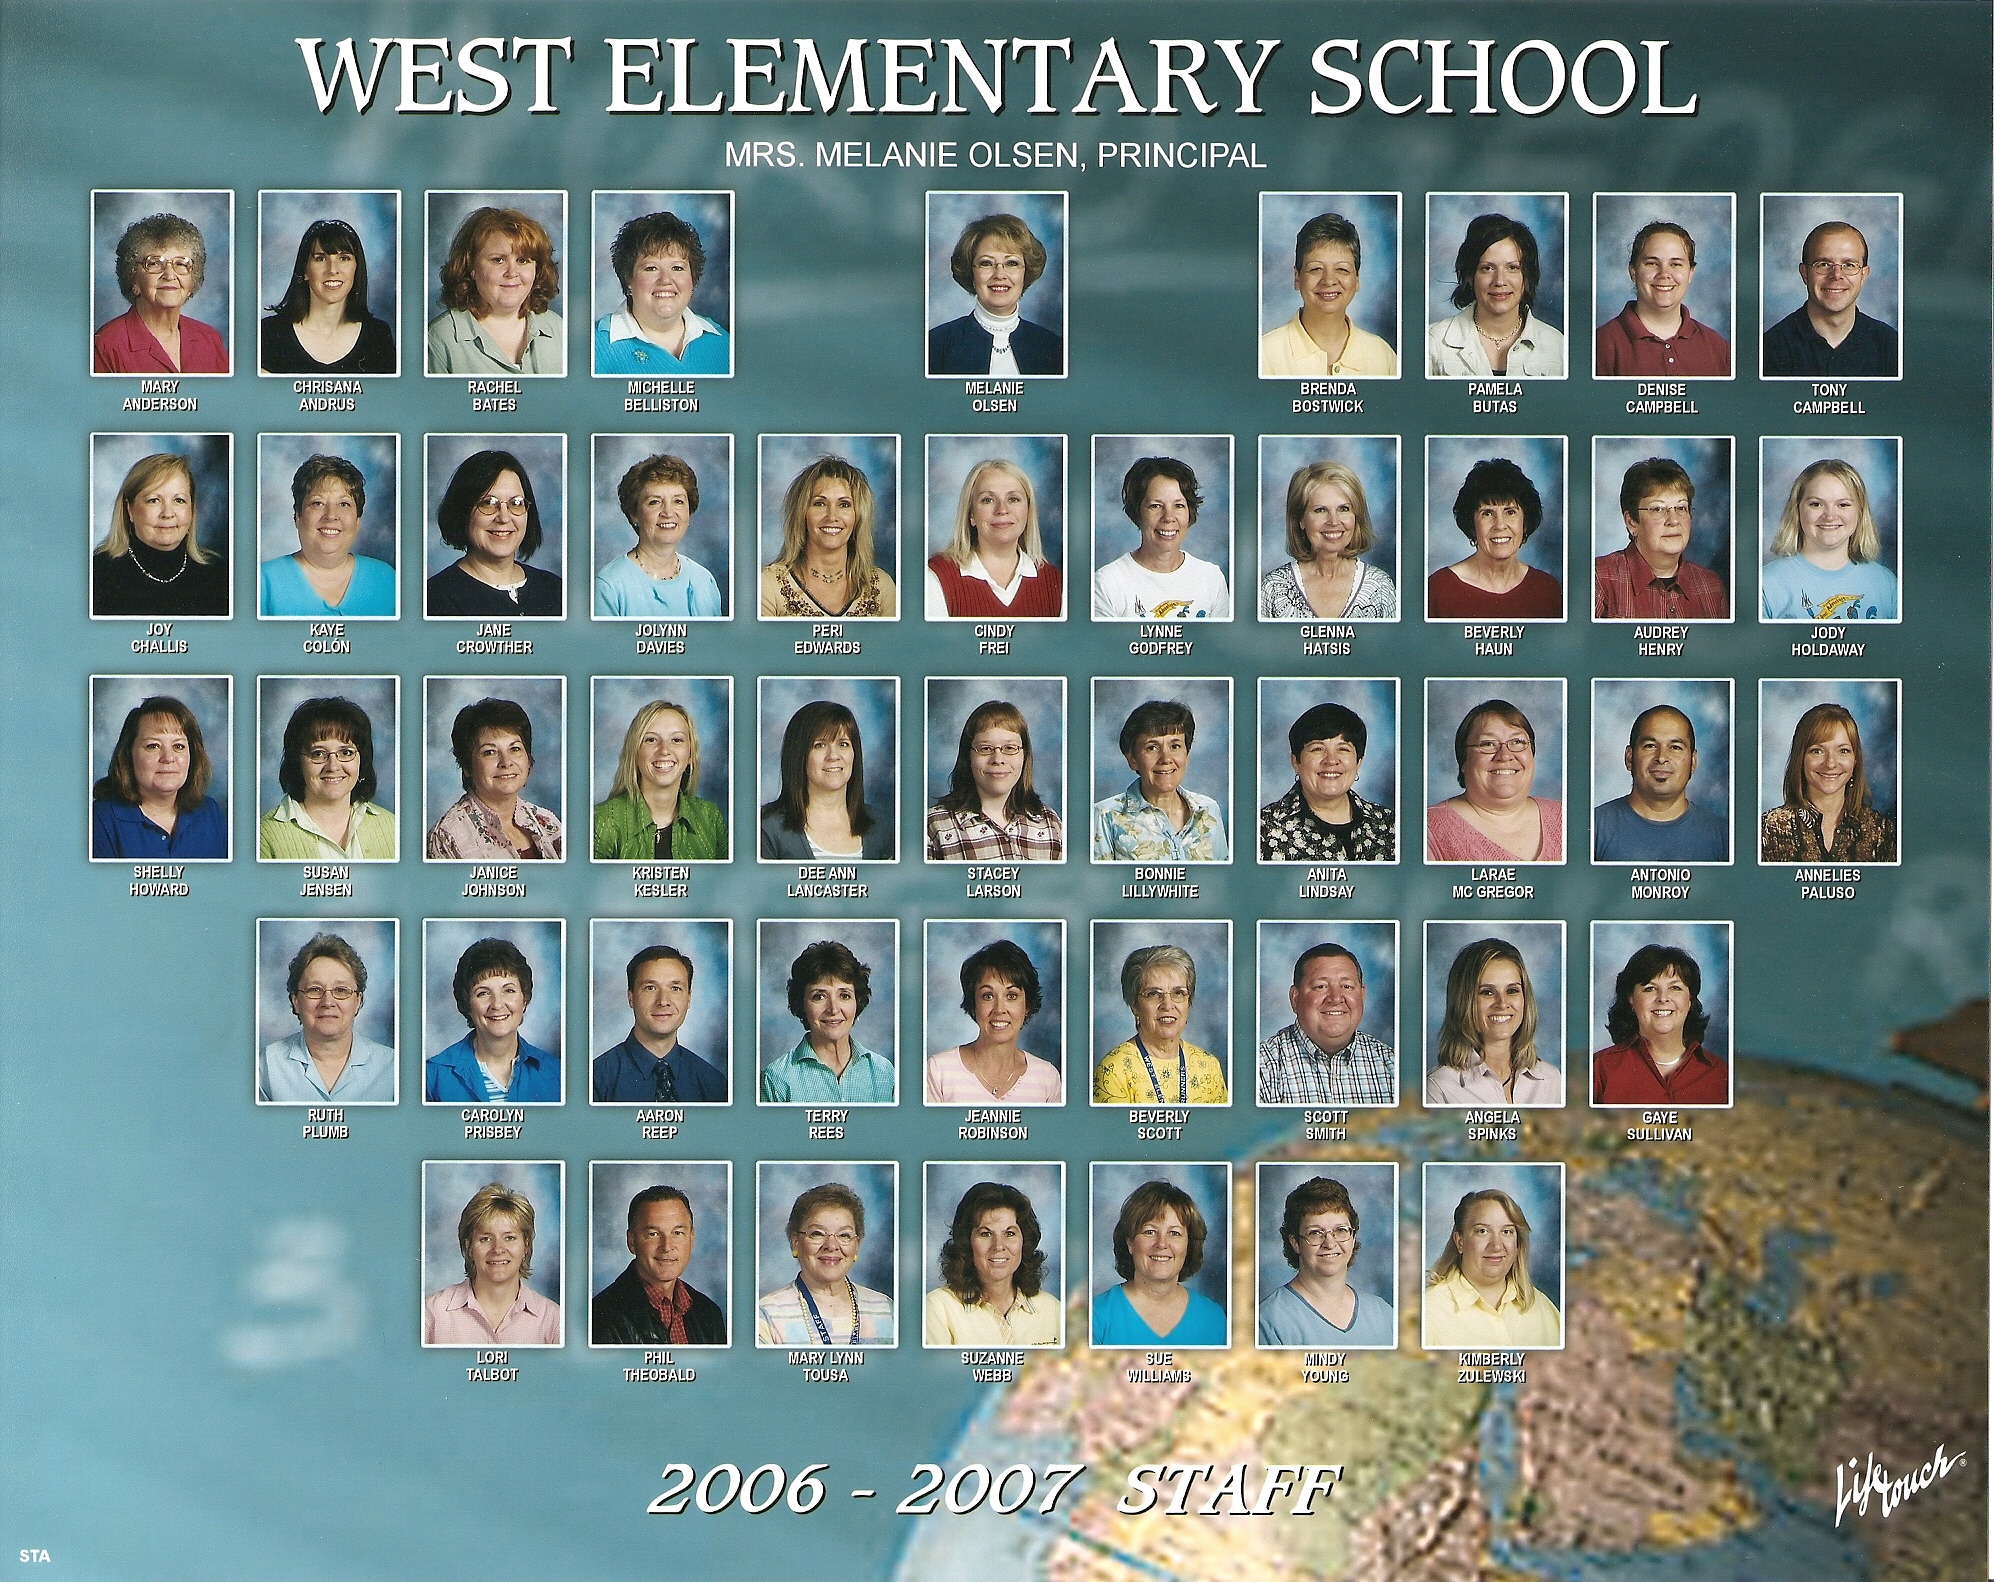 WCHS-00262 West Elementary School 2006-2007 Faculty